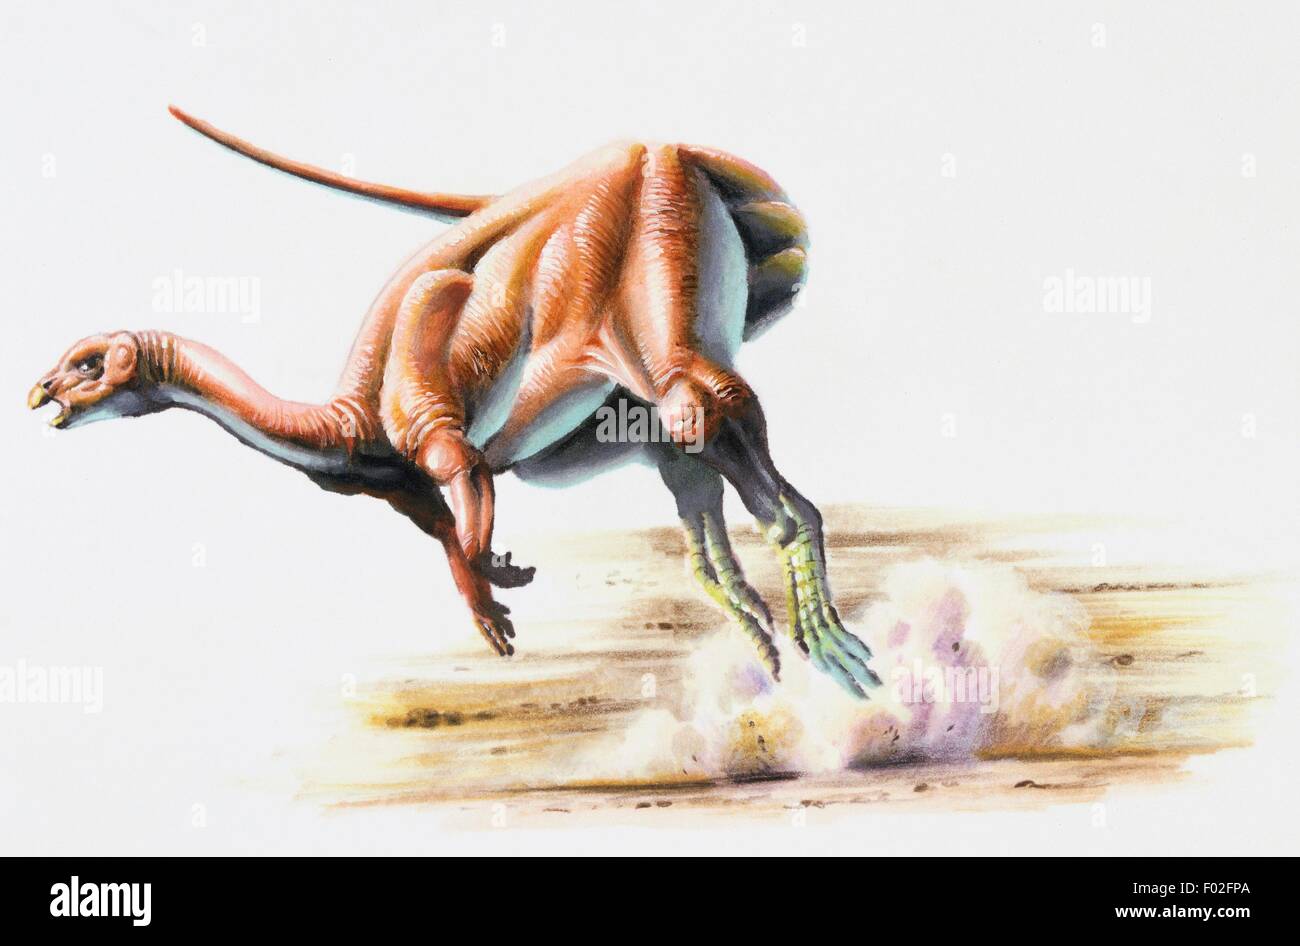 Yandusaurus hongheensis, Jurassique moyen. Illustration de Steve White. Banque D'Images